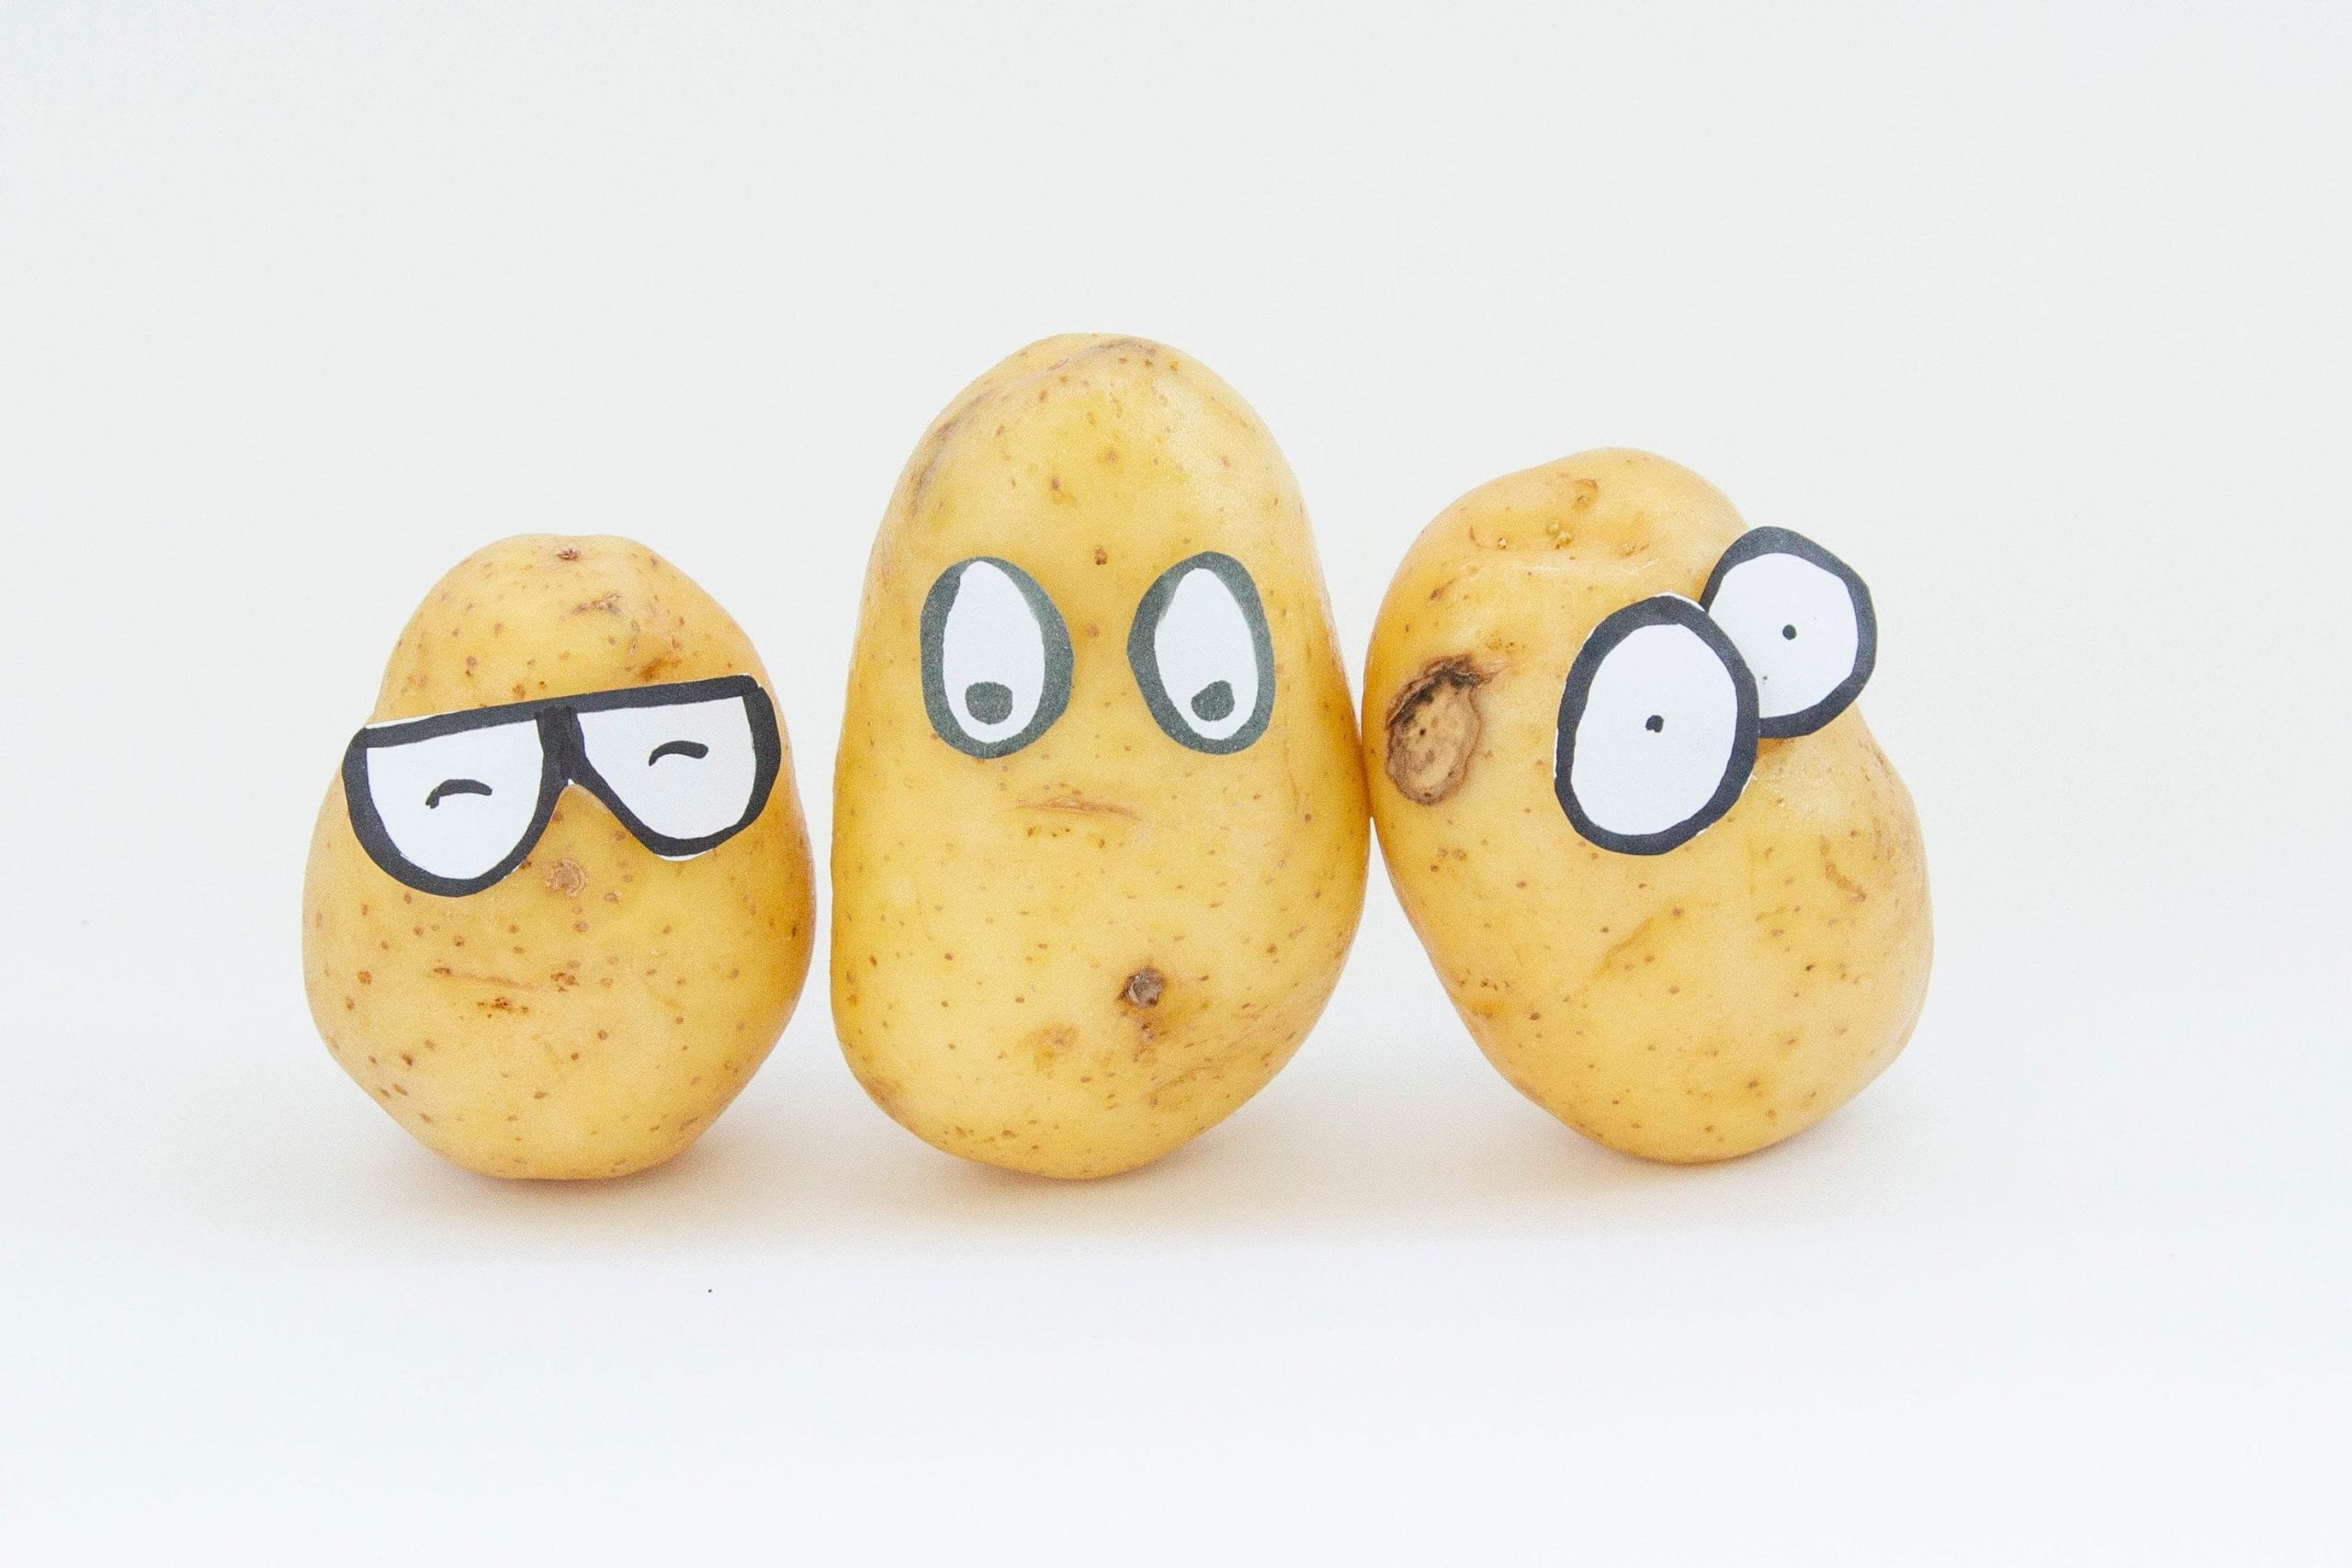 Three potatoes with cartoon eyes drawn onto paper stuck on them.